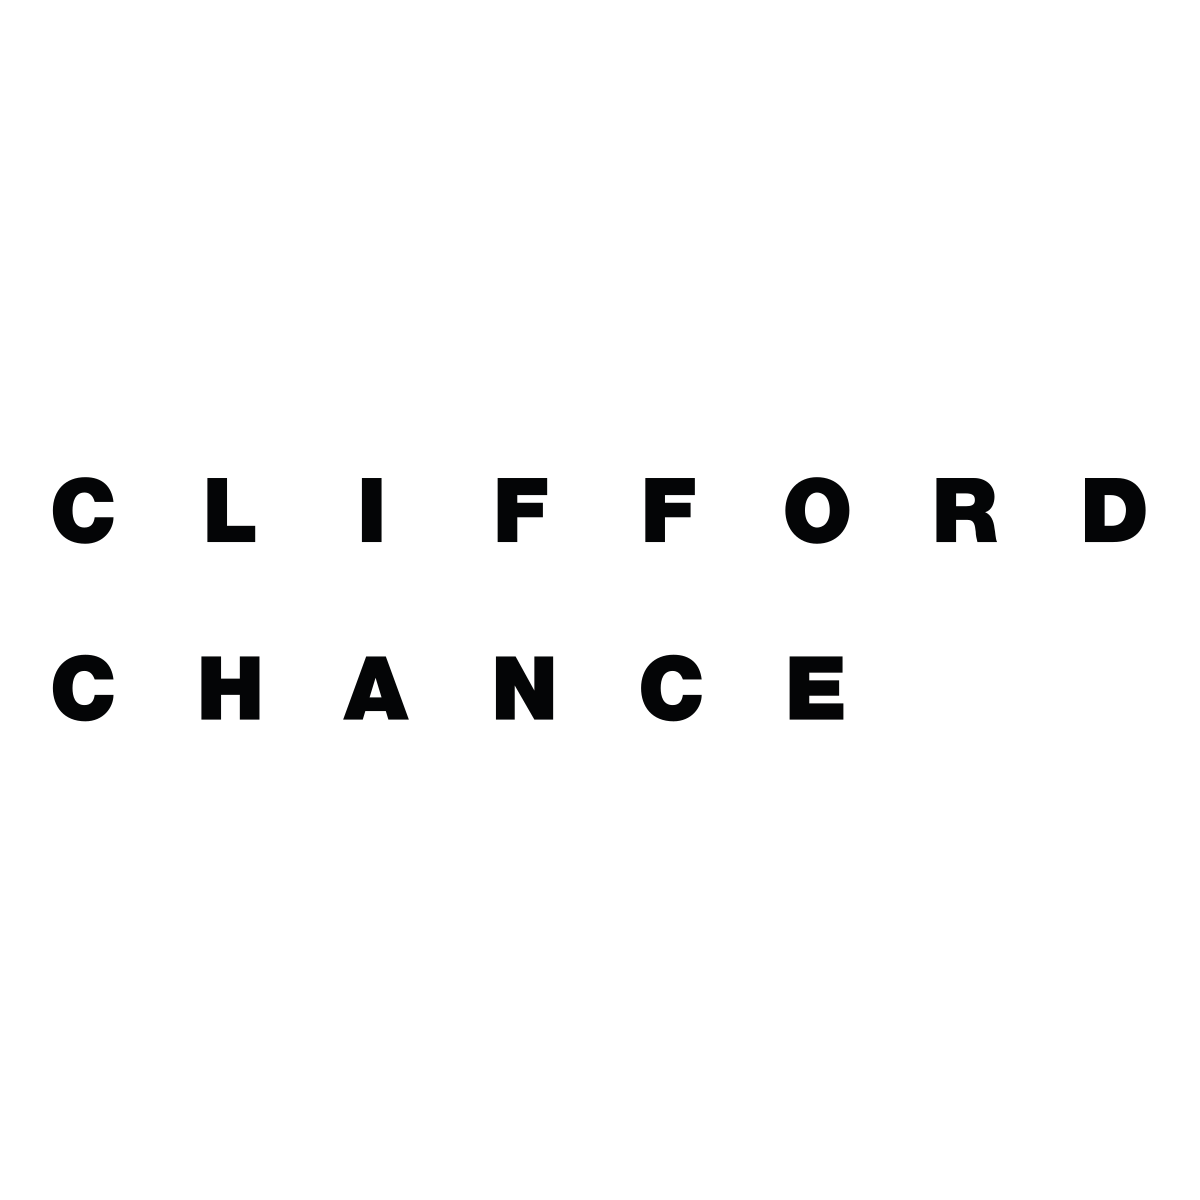 Clifford chance law firm logo